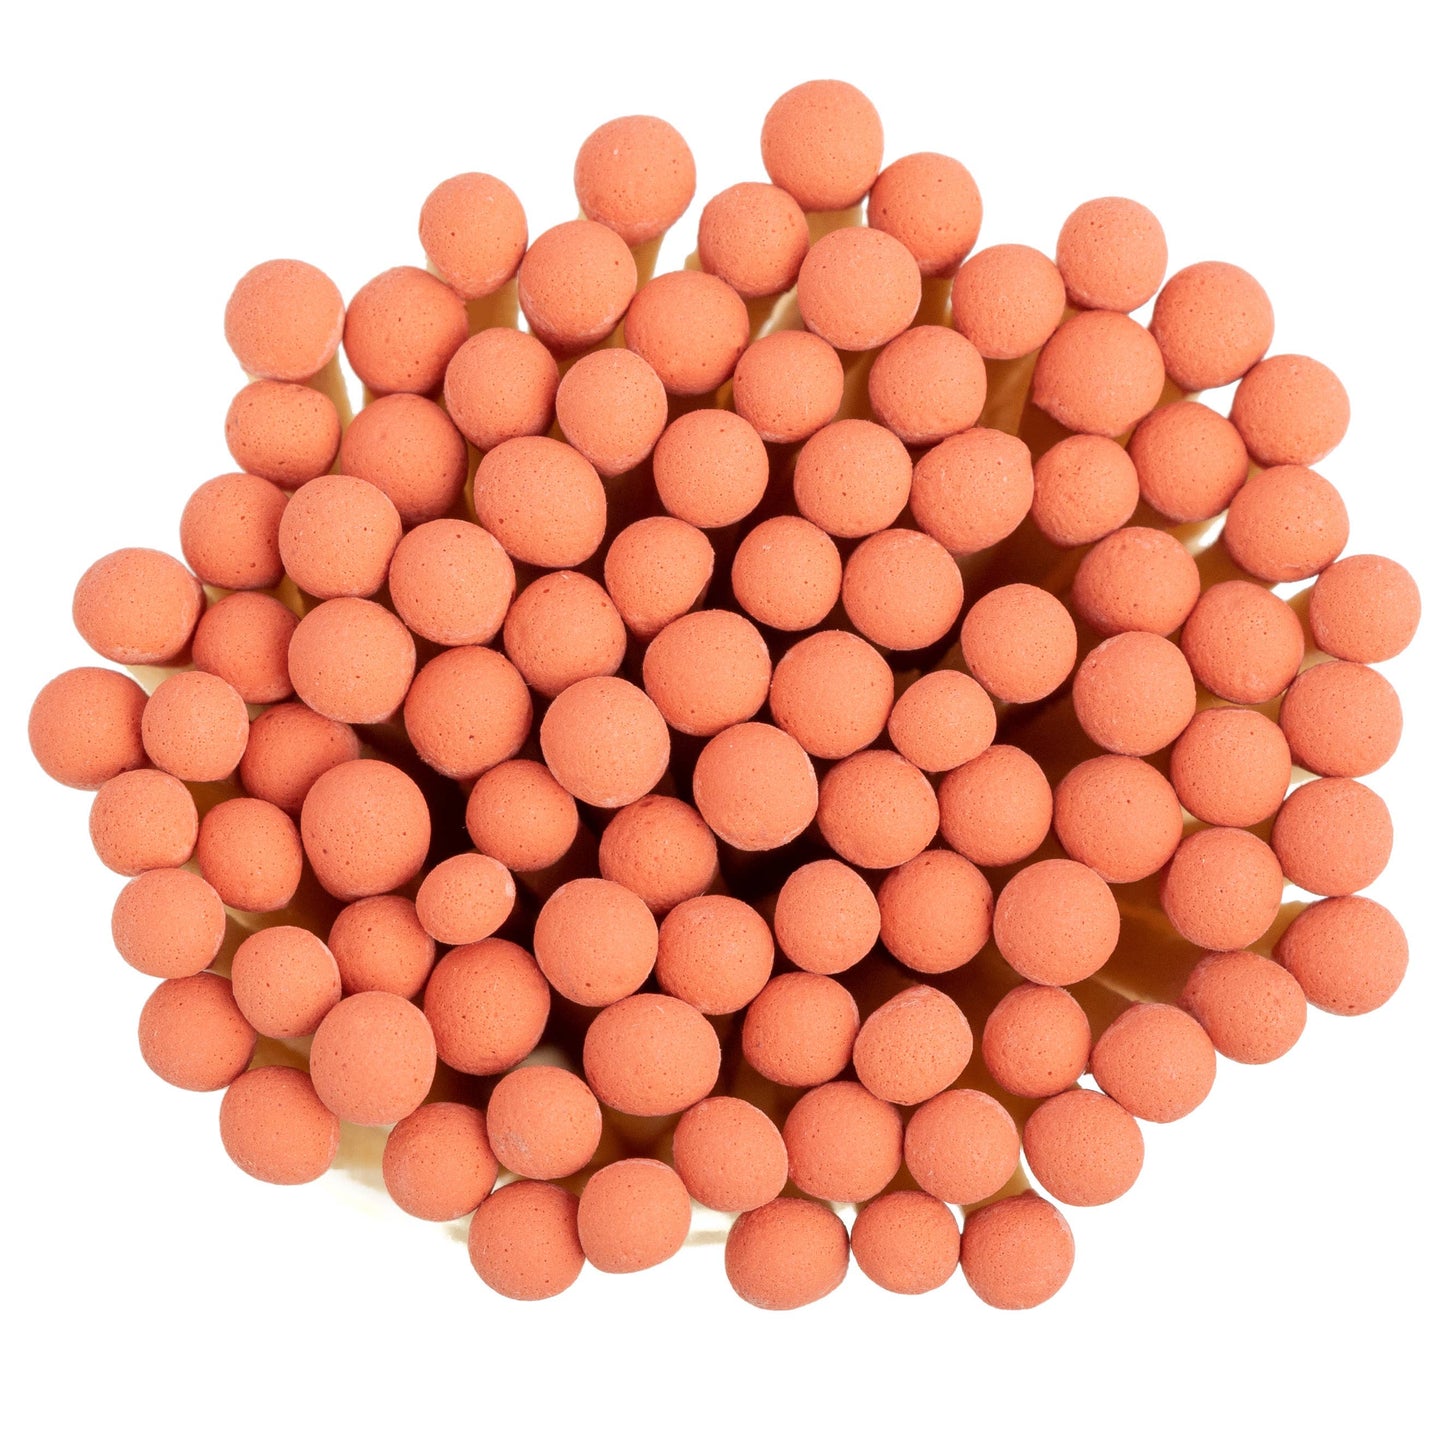 Tangerine Matches in Medium Corked Vial